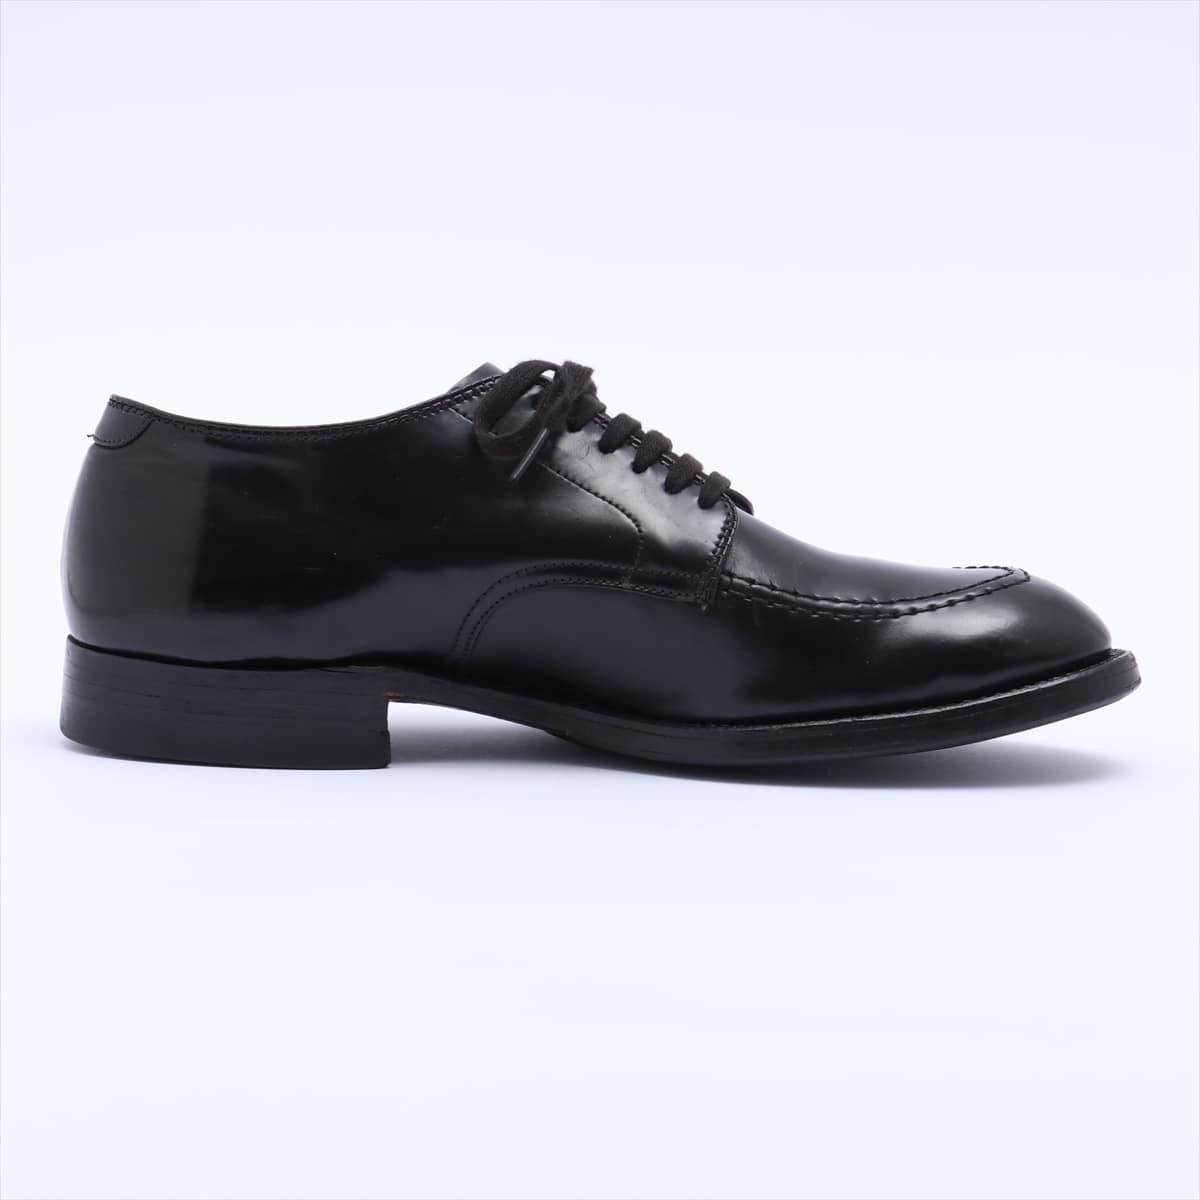 Alden Leather Leather shoes 8 Men's Black